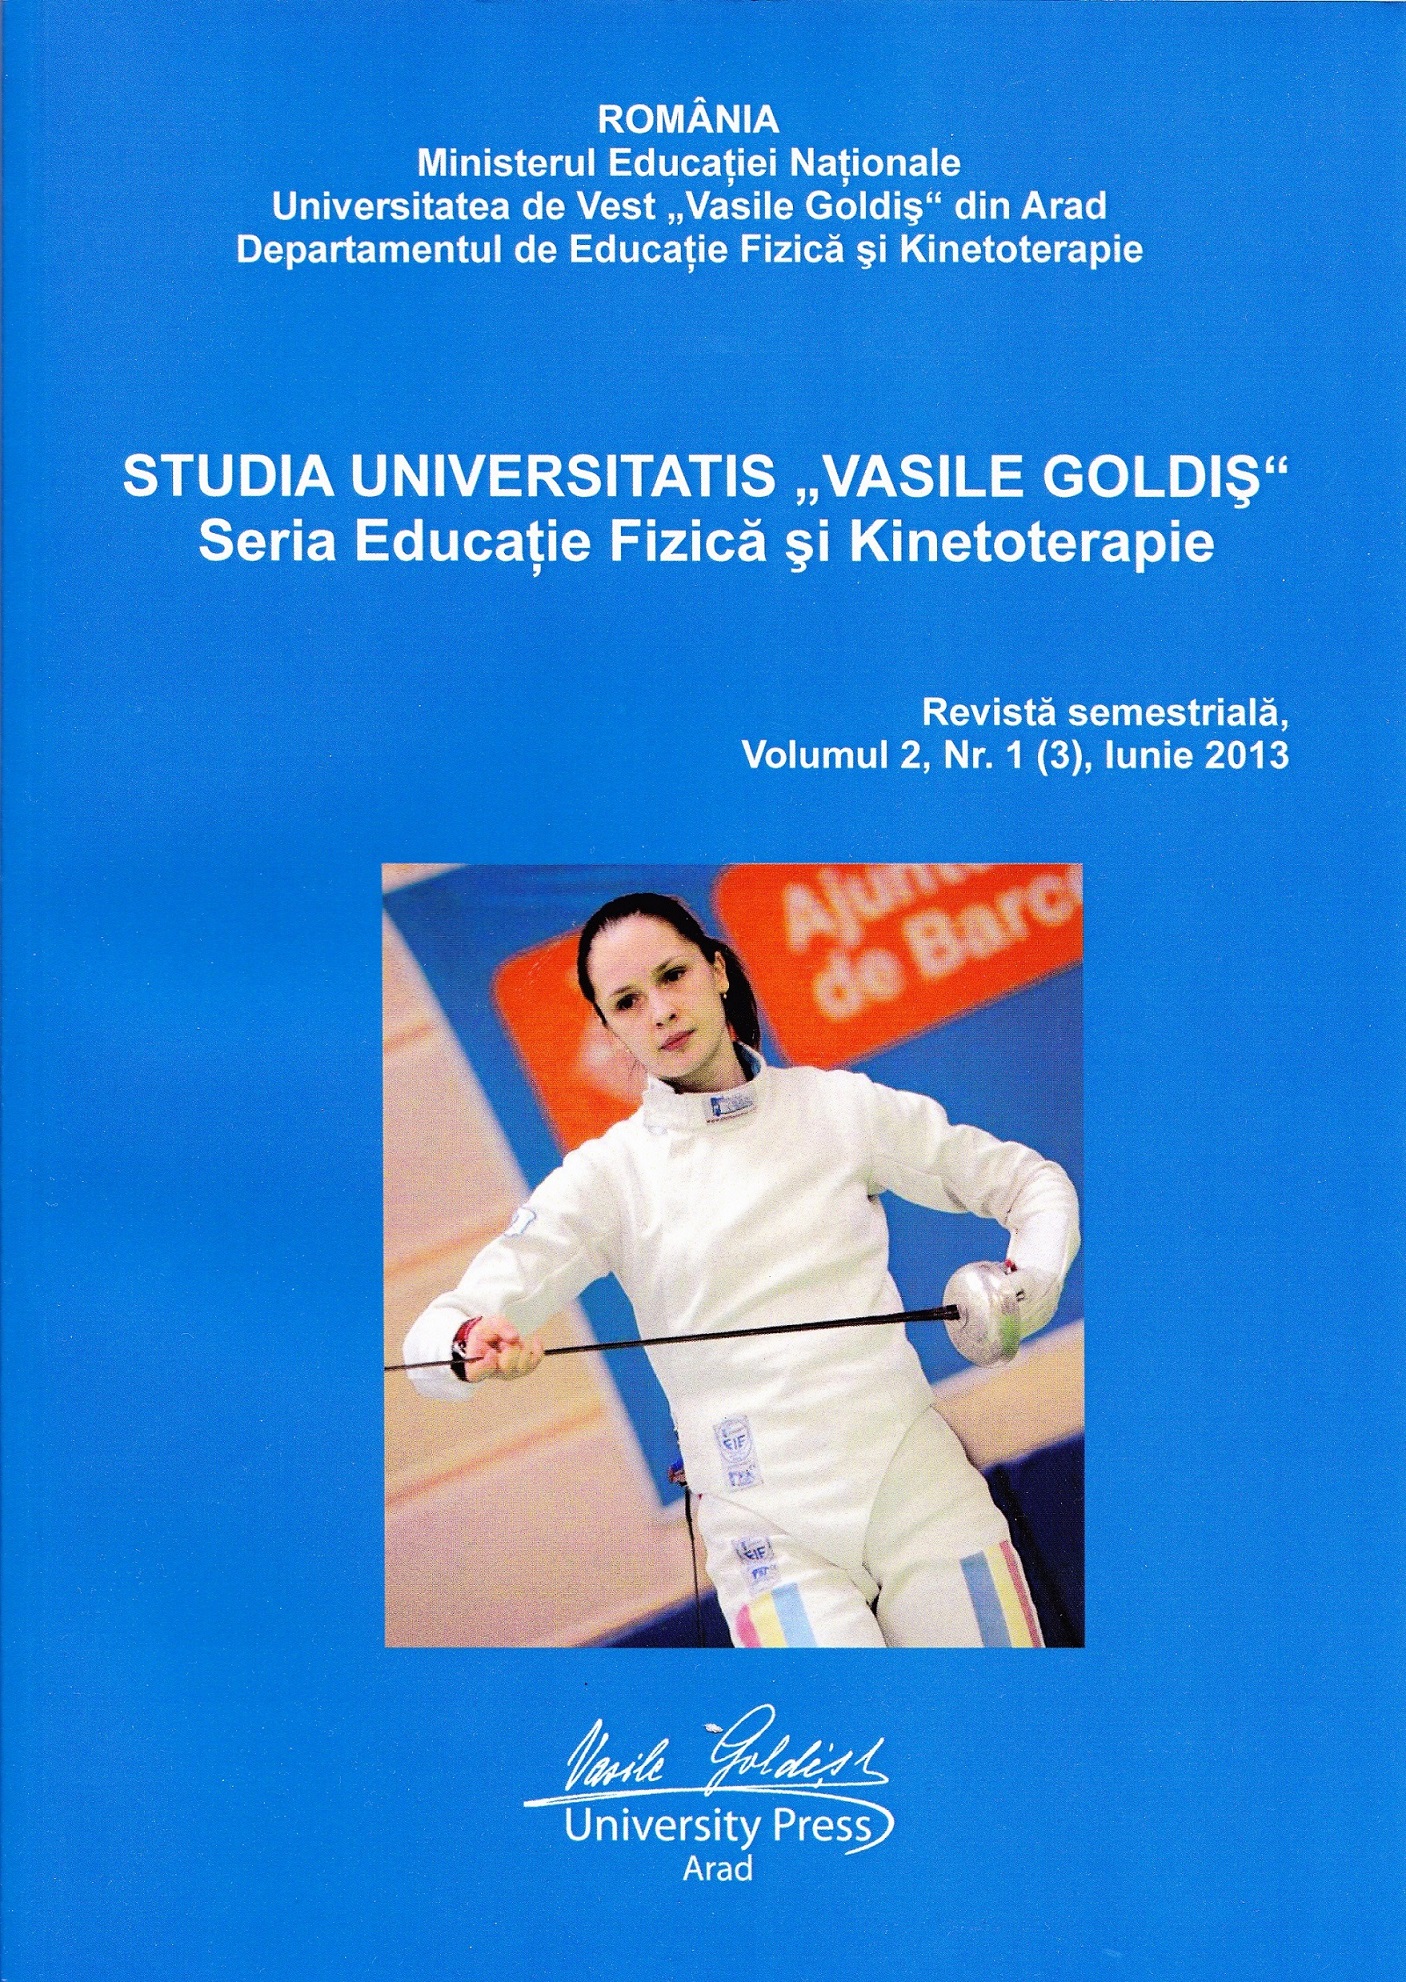 Simona Pop - Bronze medal in fencing at Summer Universiade 2013, Kazan, Russia